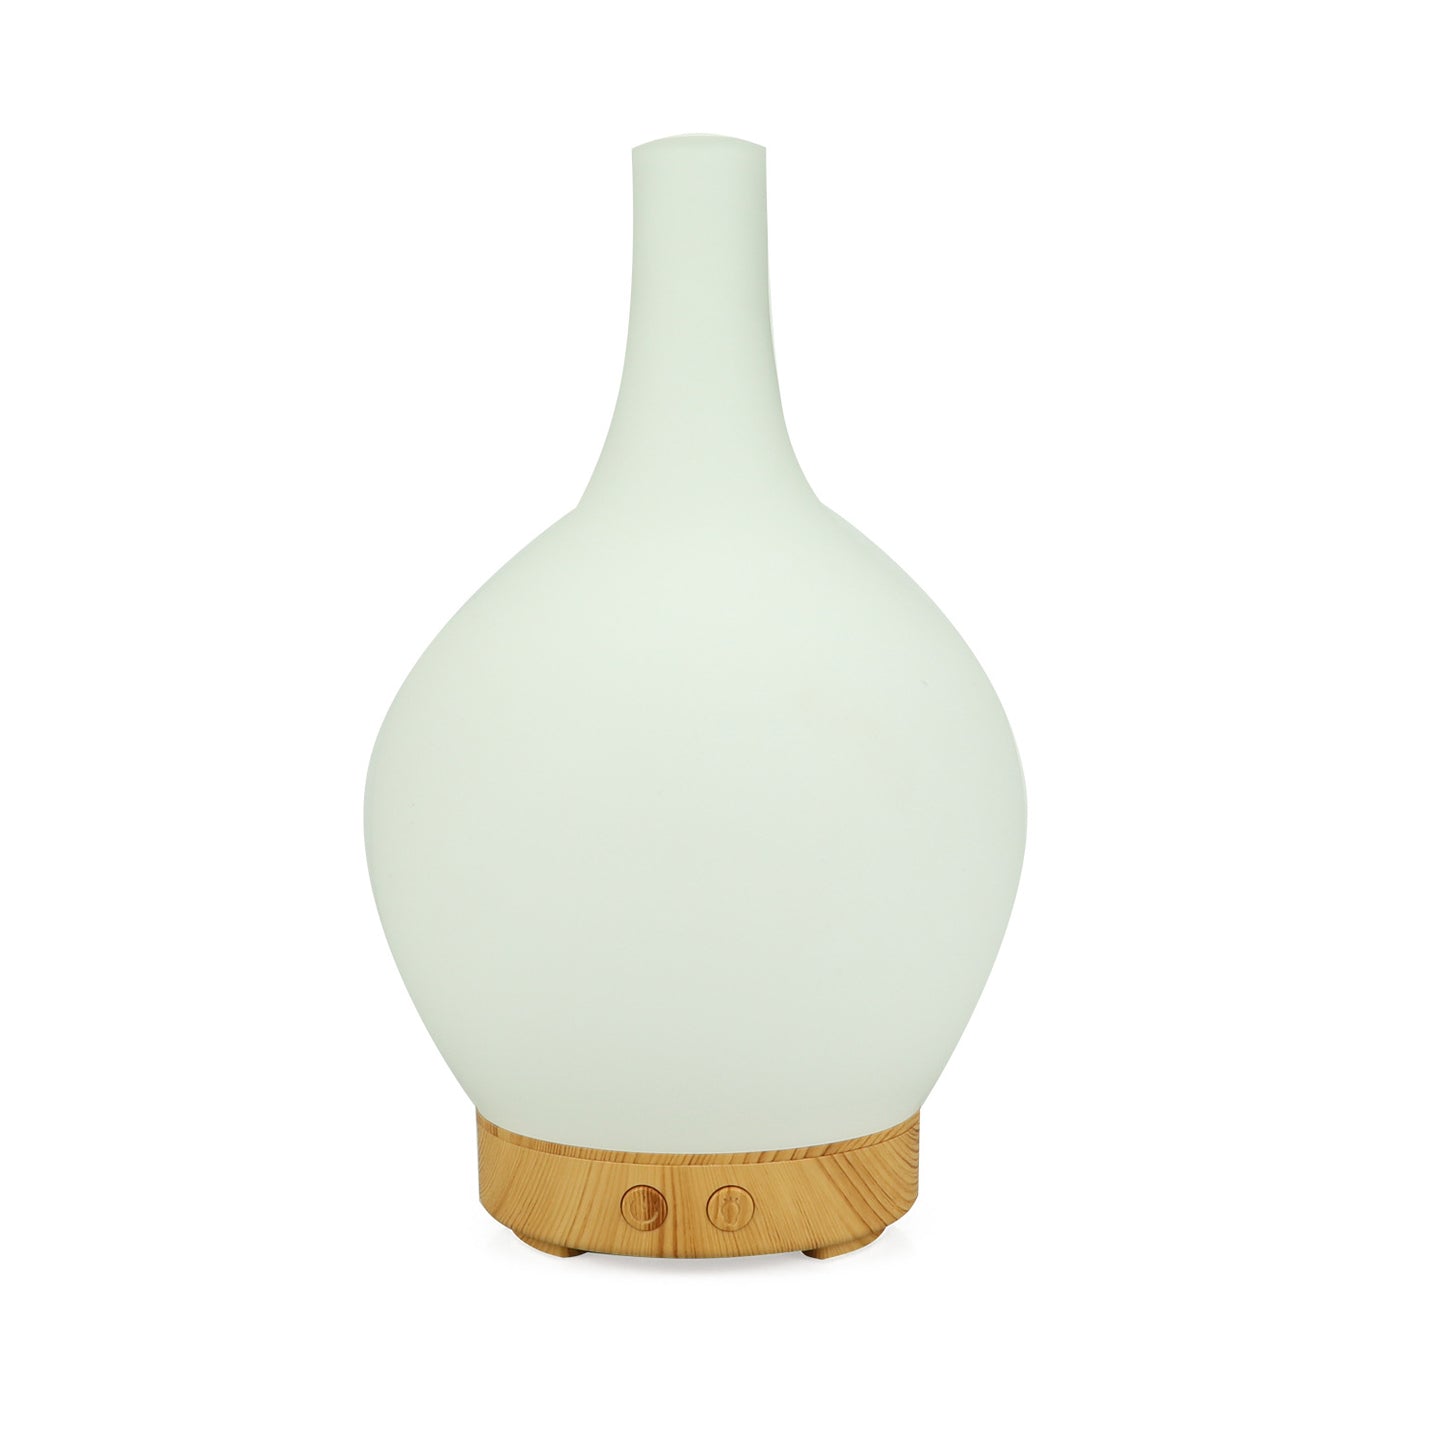 Ceramic glass aroma essential oil diffuser, ultrasonic humidifier for home